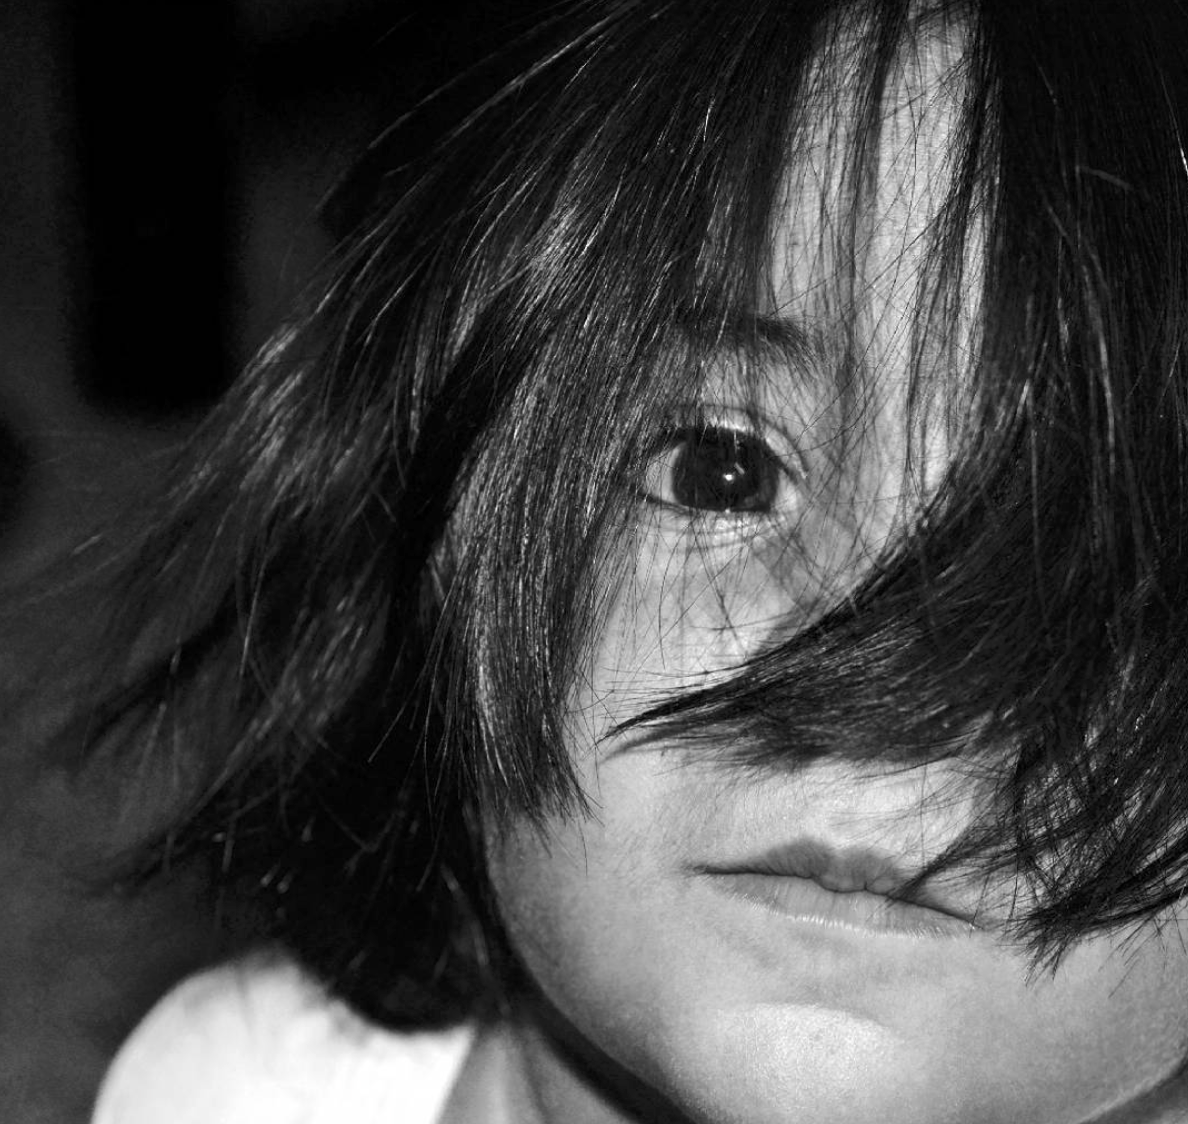 Little kid in black & white.